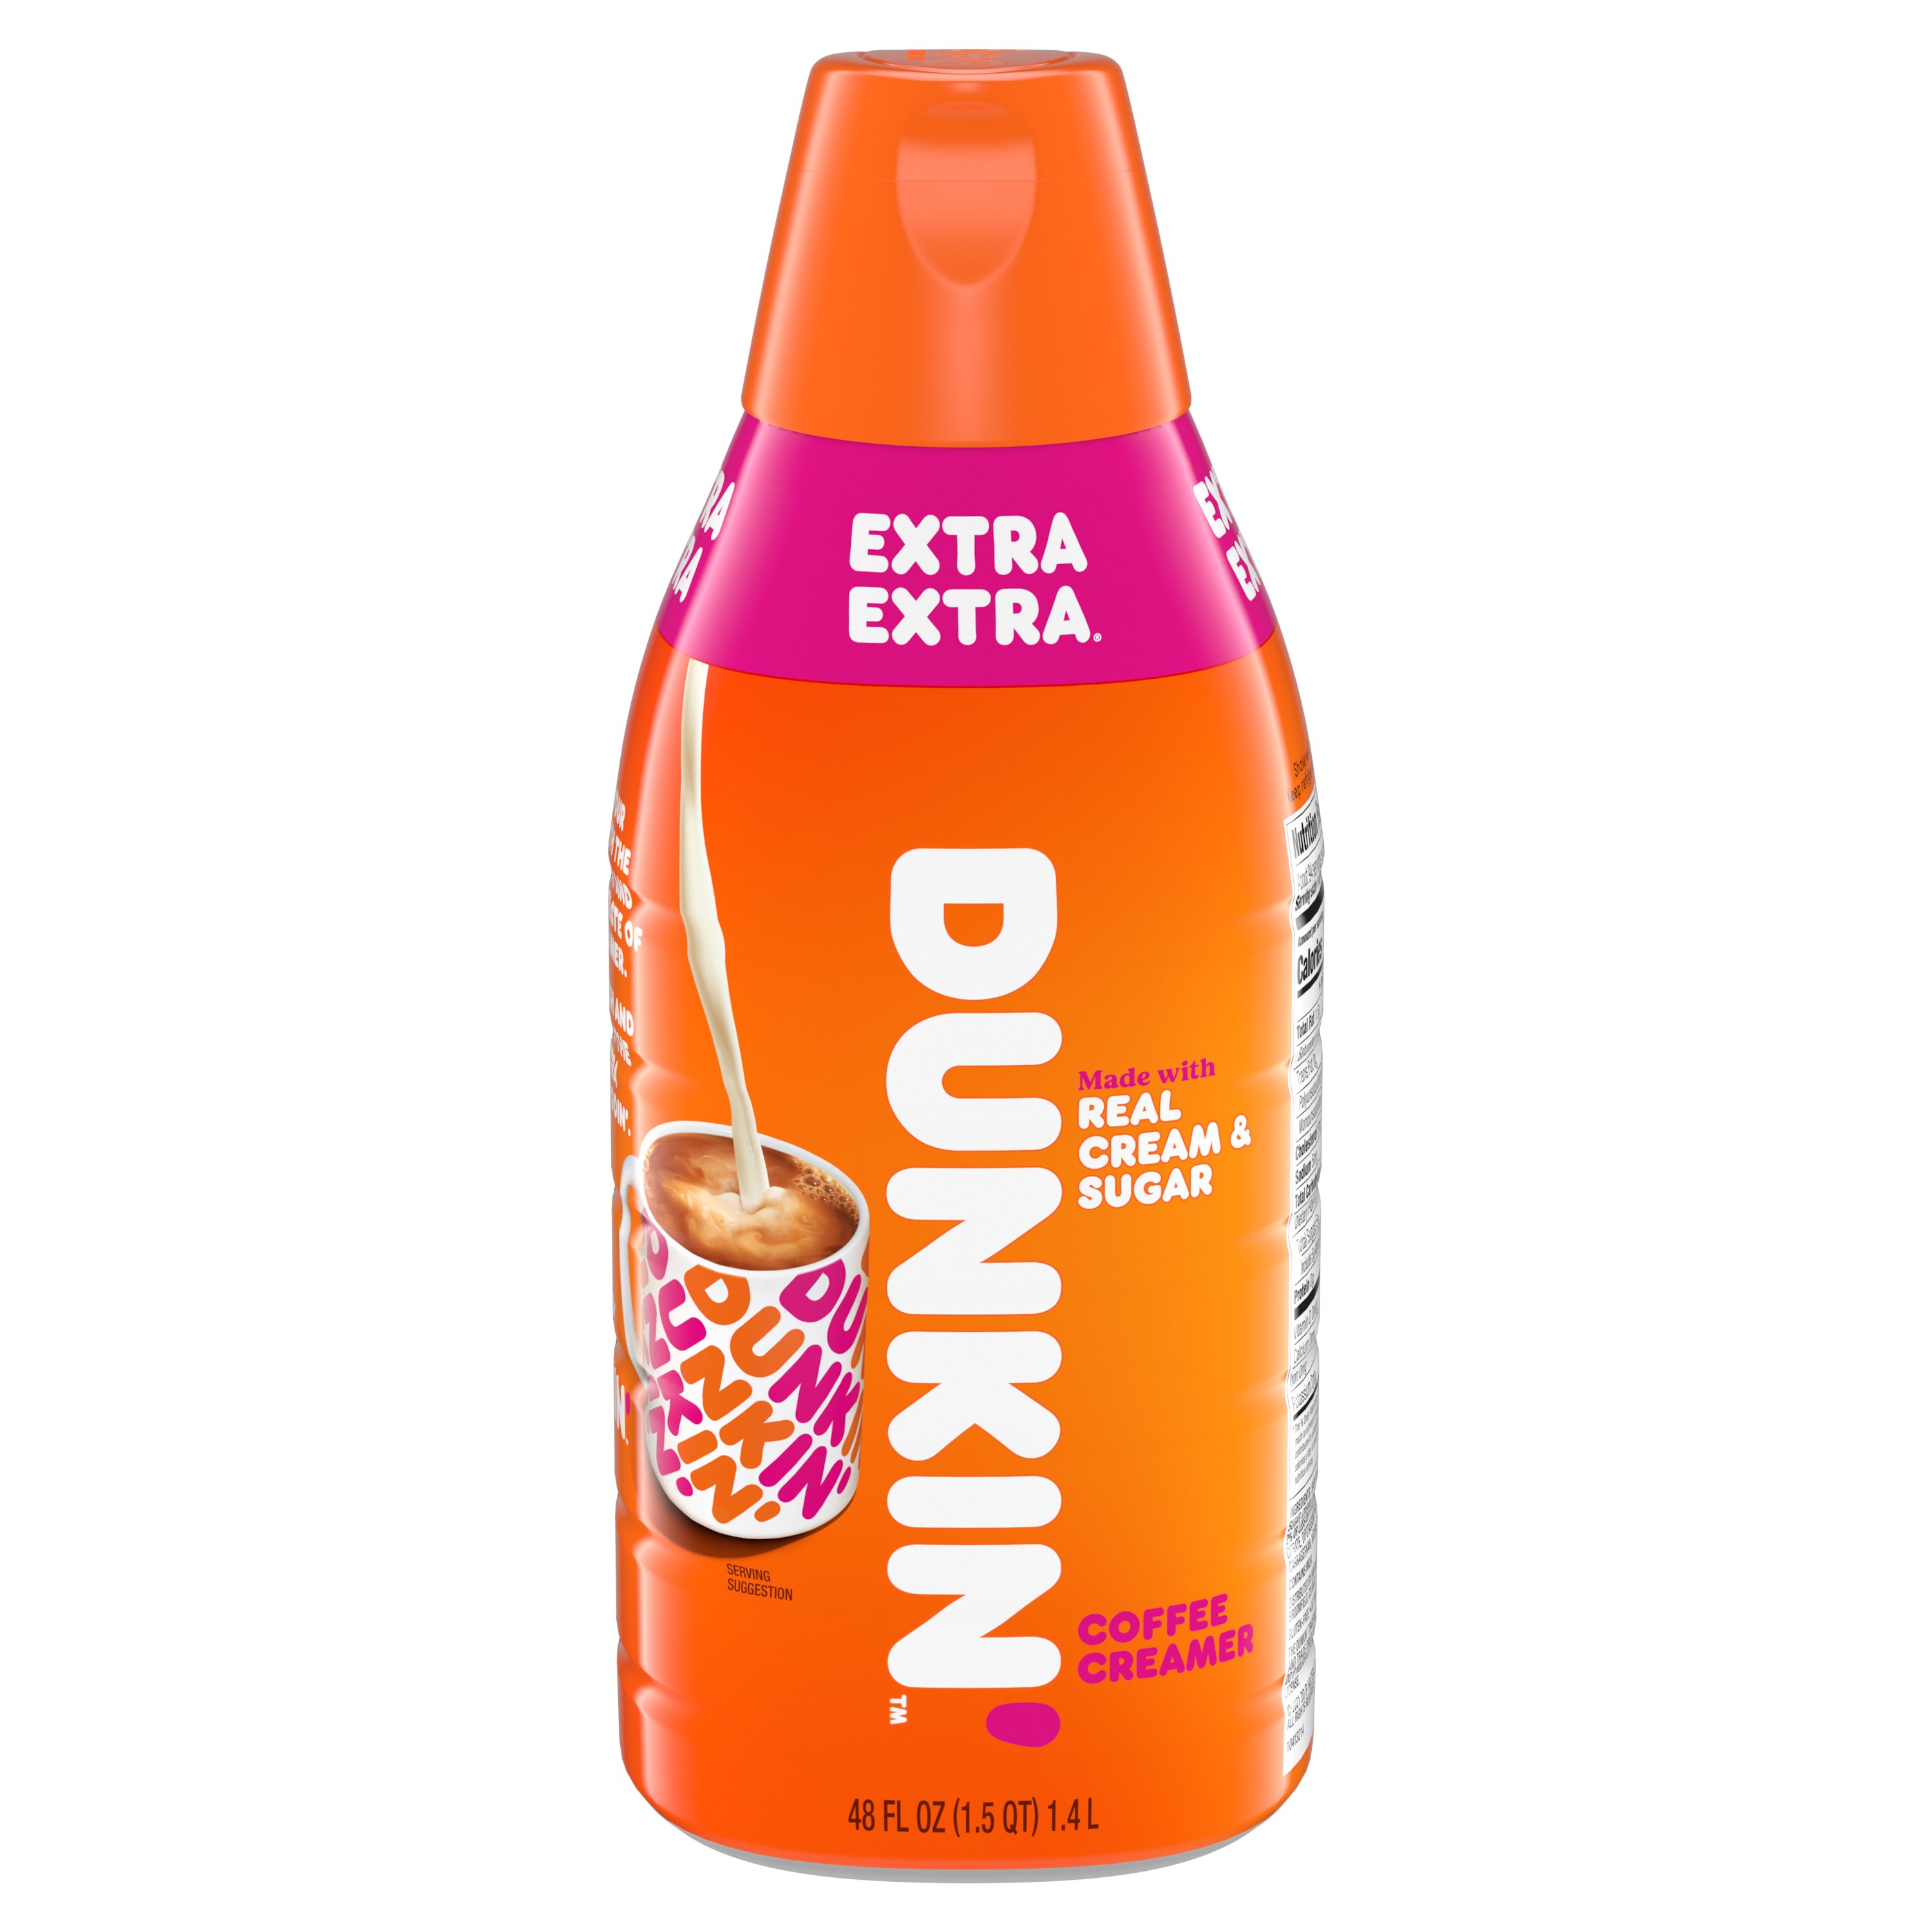 Dunkin' Donuts Extra Extra Liquid Coffee Creamer Shop